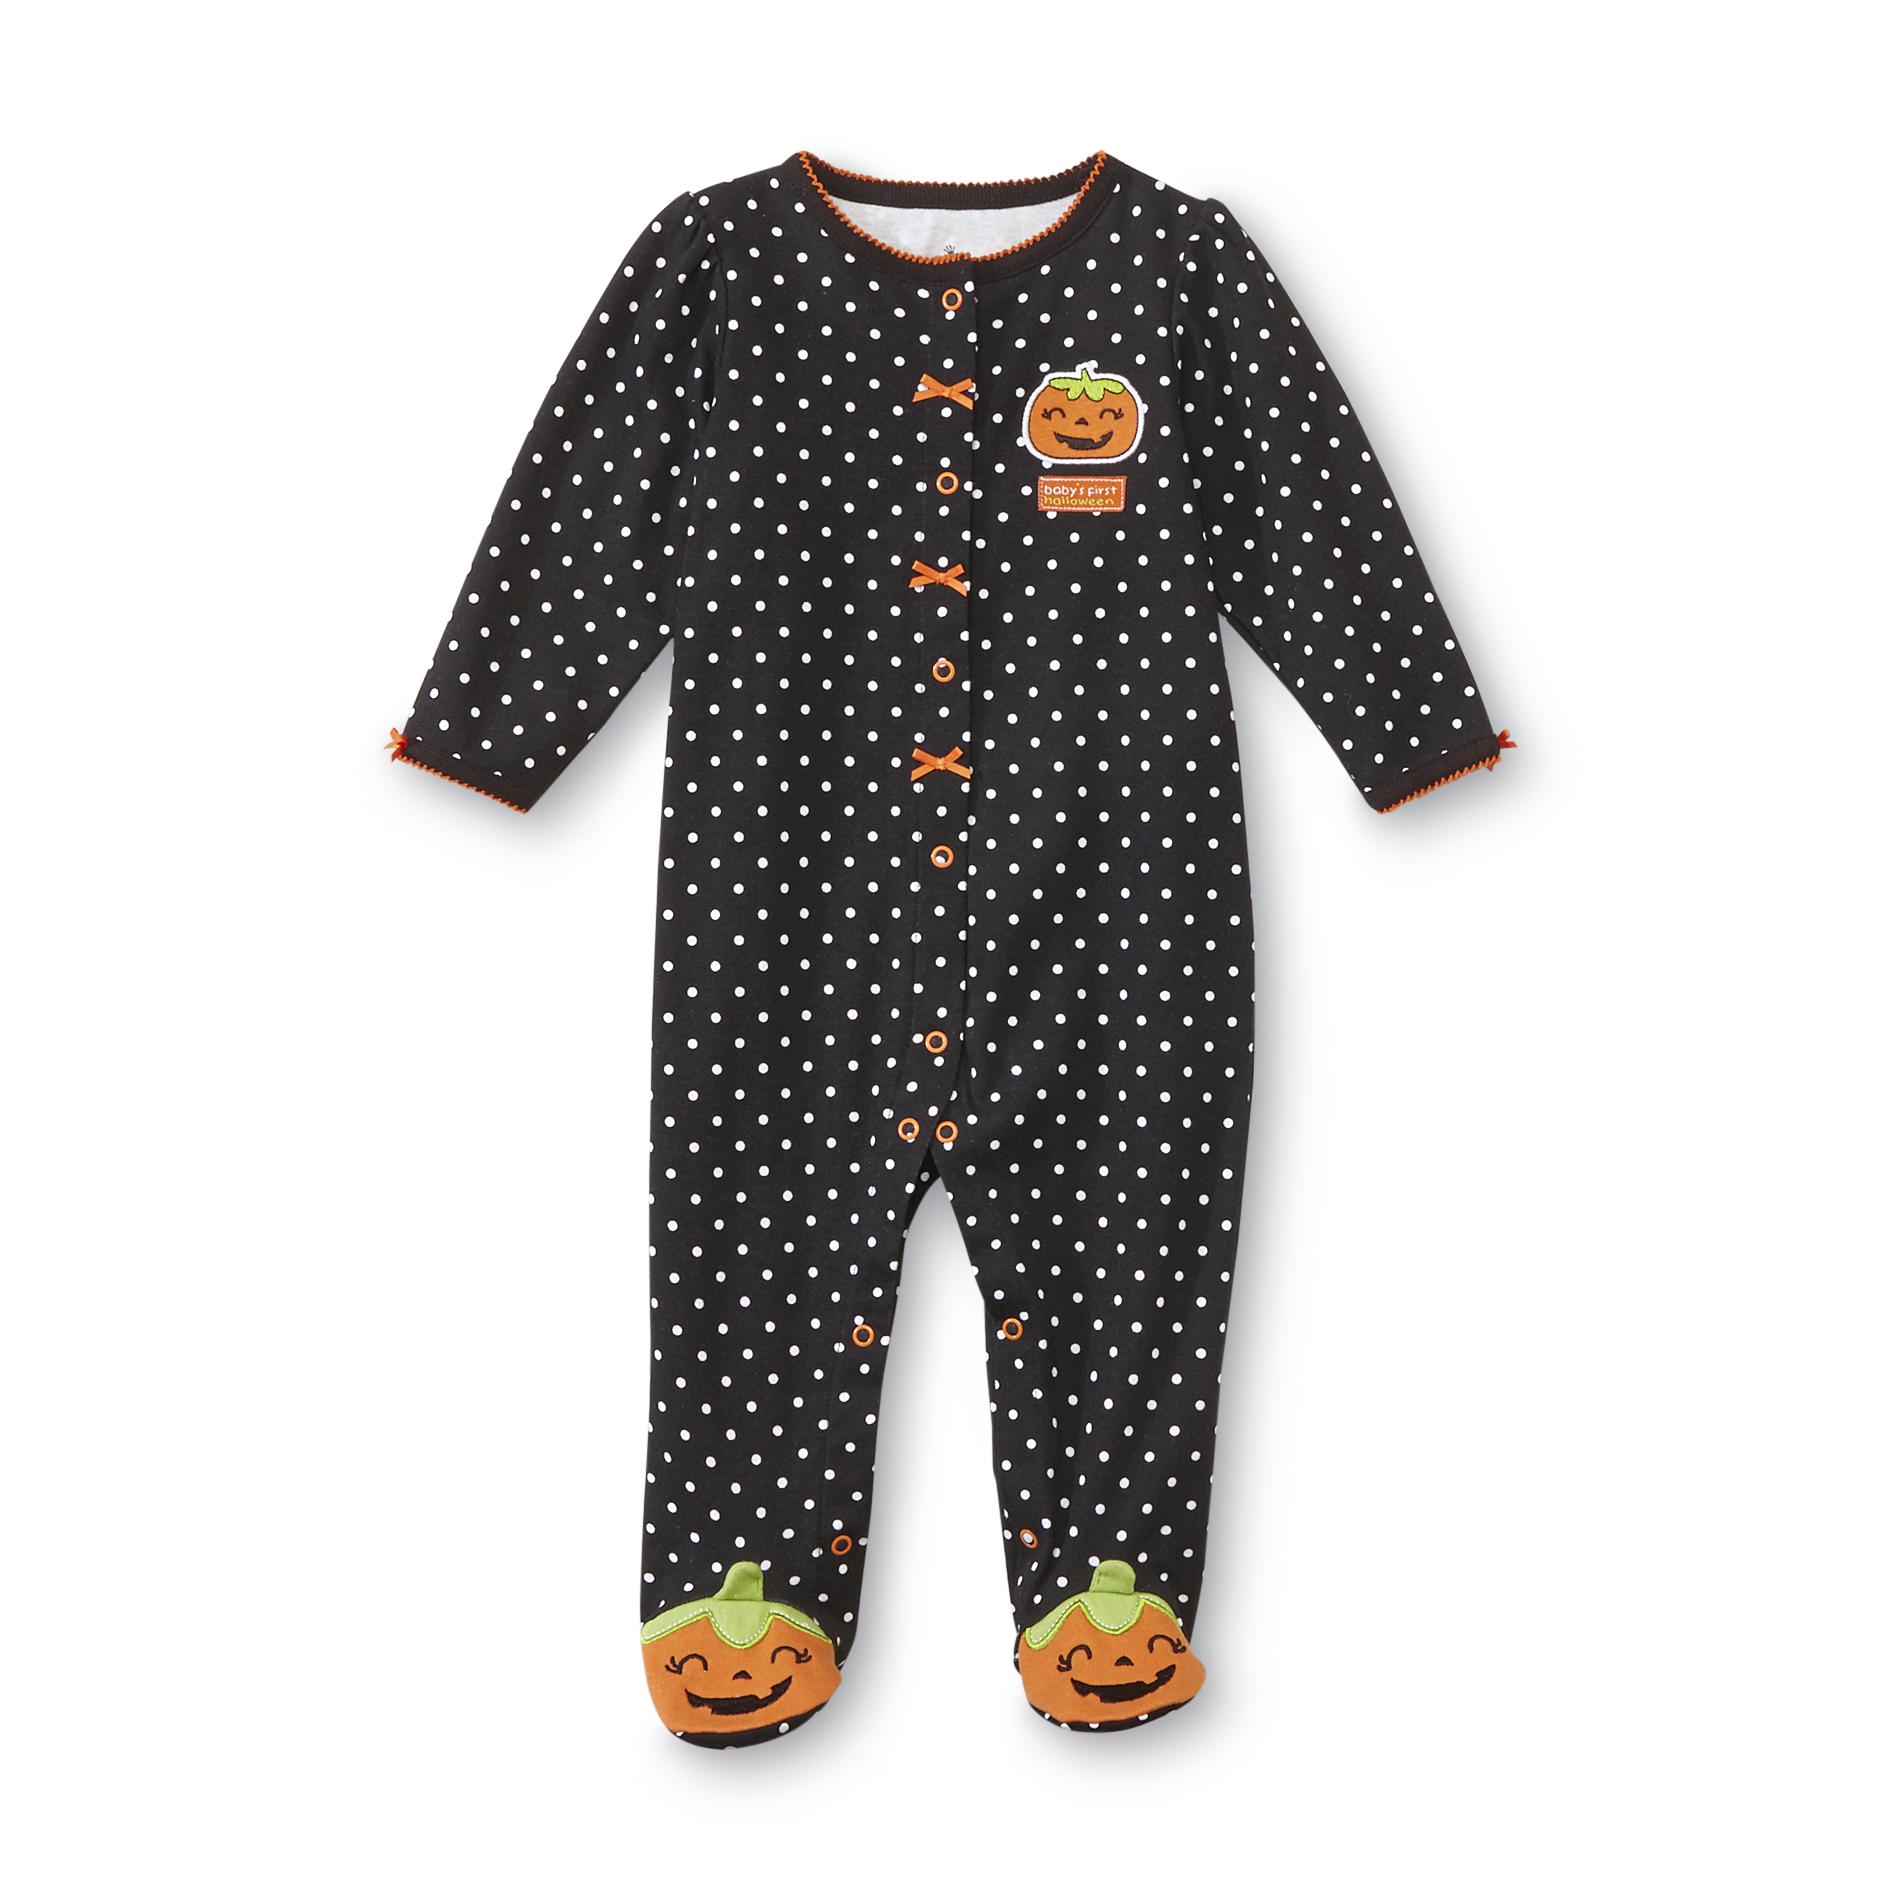 Holiday Editions Newborn Girl's Halloween Sleeper Pajamas - Pumpkins